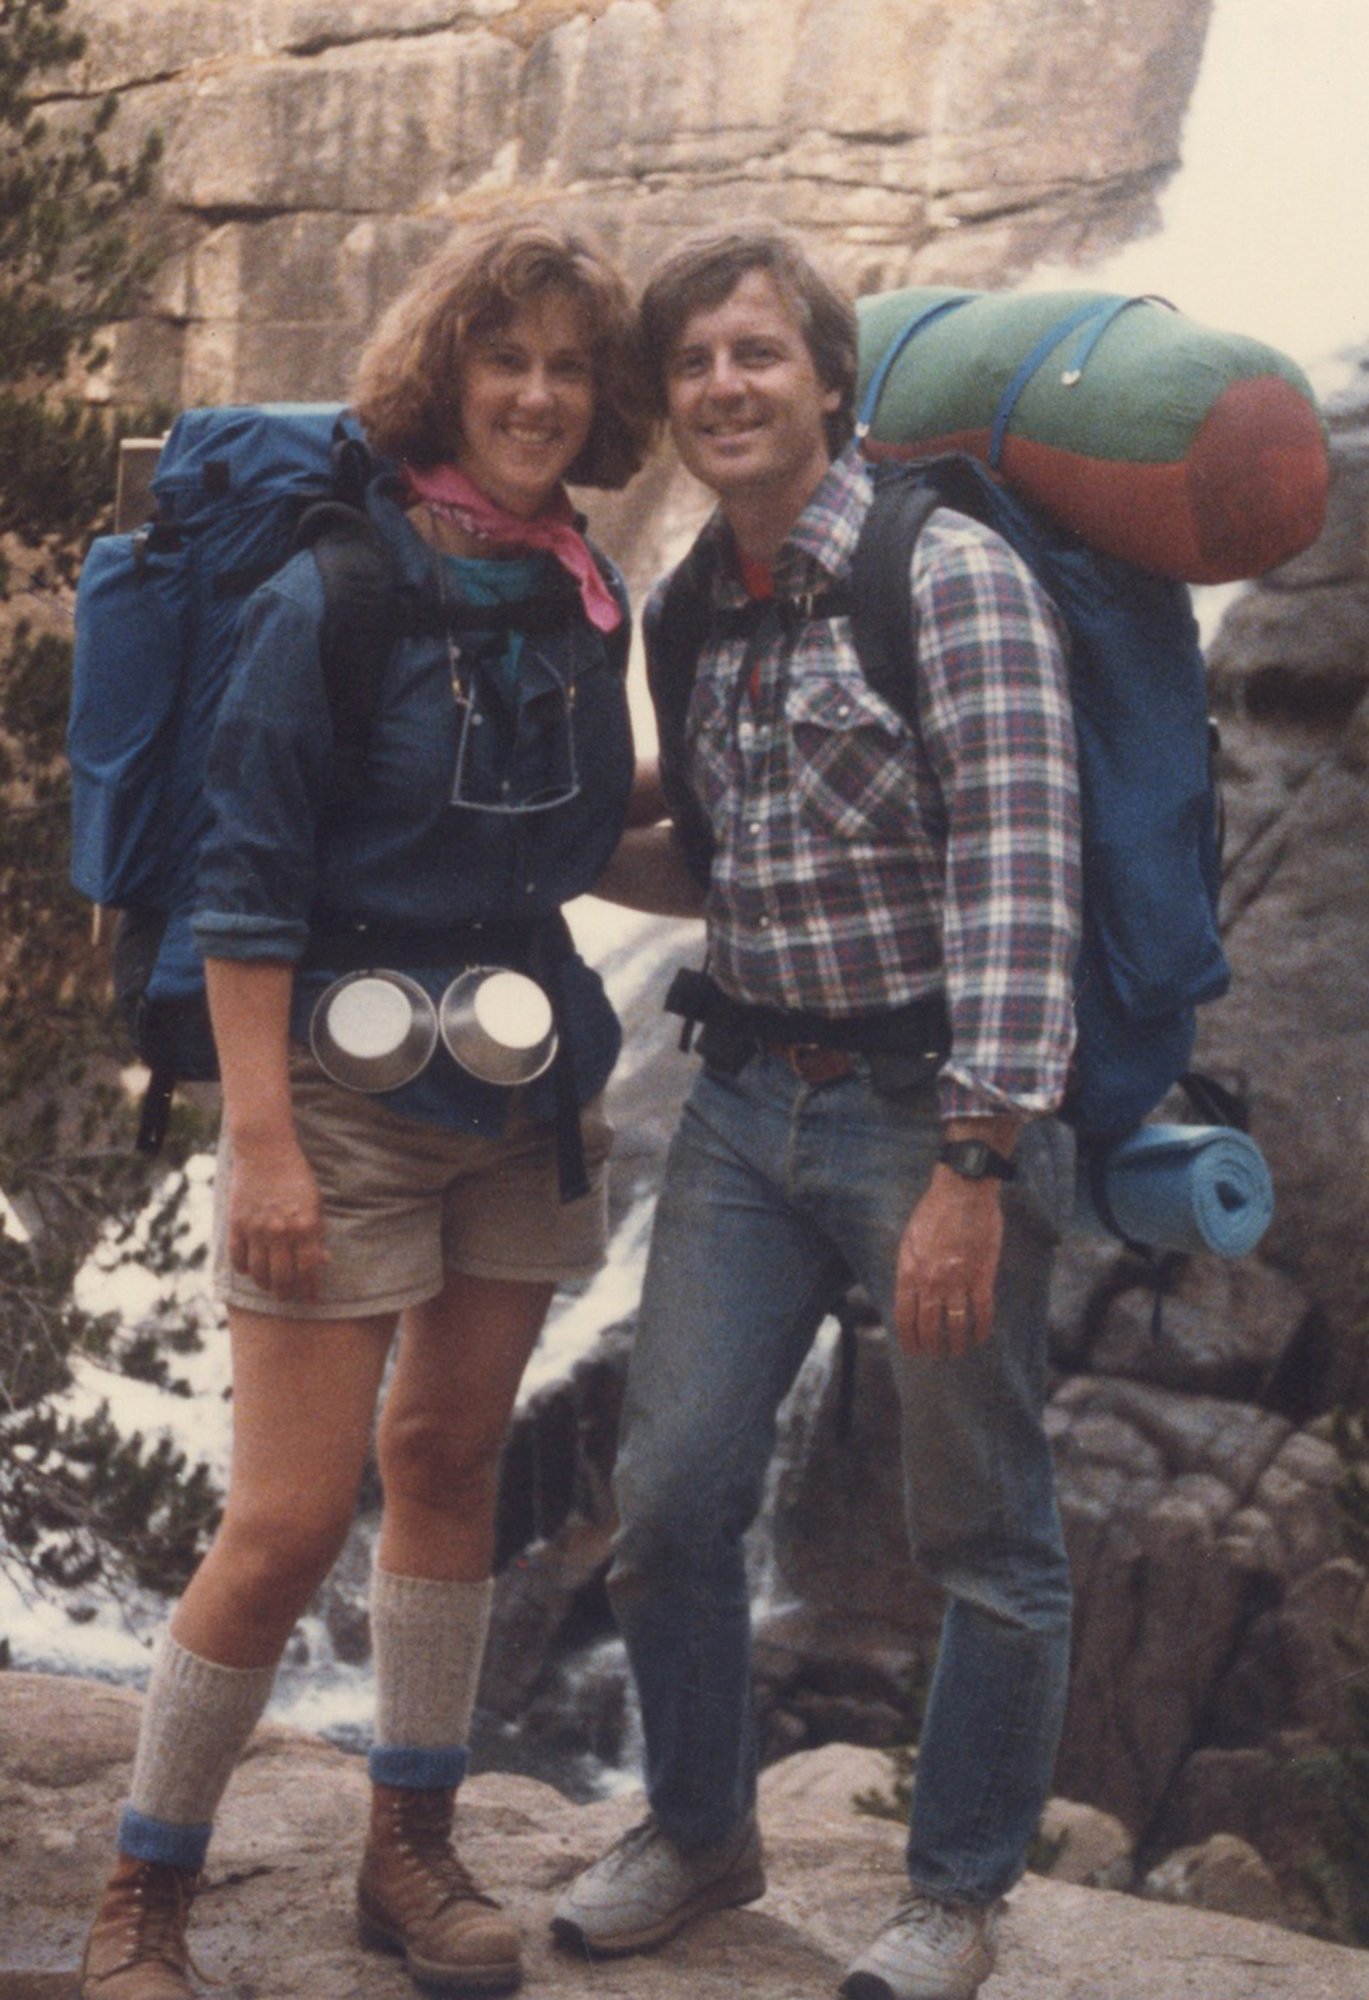 Chris Fitzsimmons at Yosemite with Michael Harlock